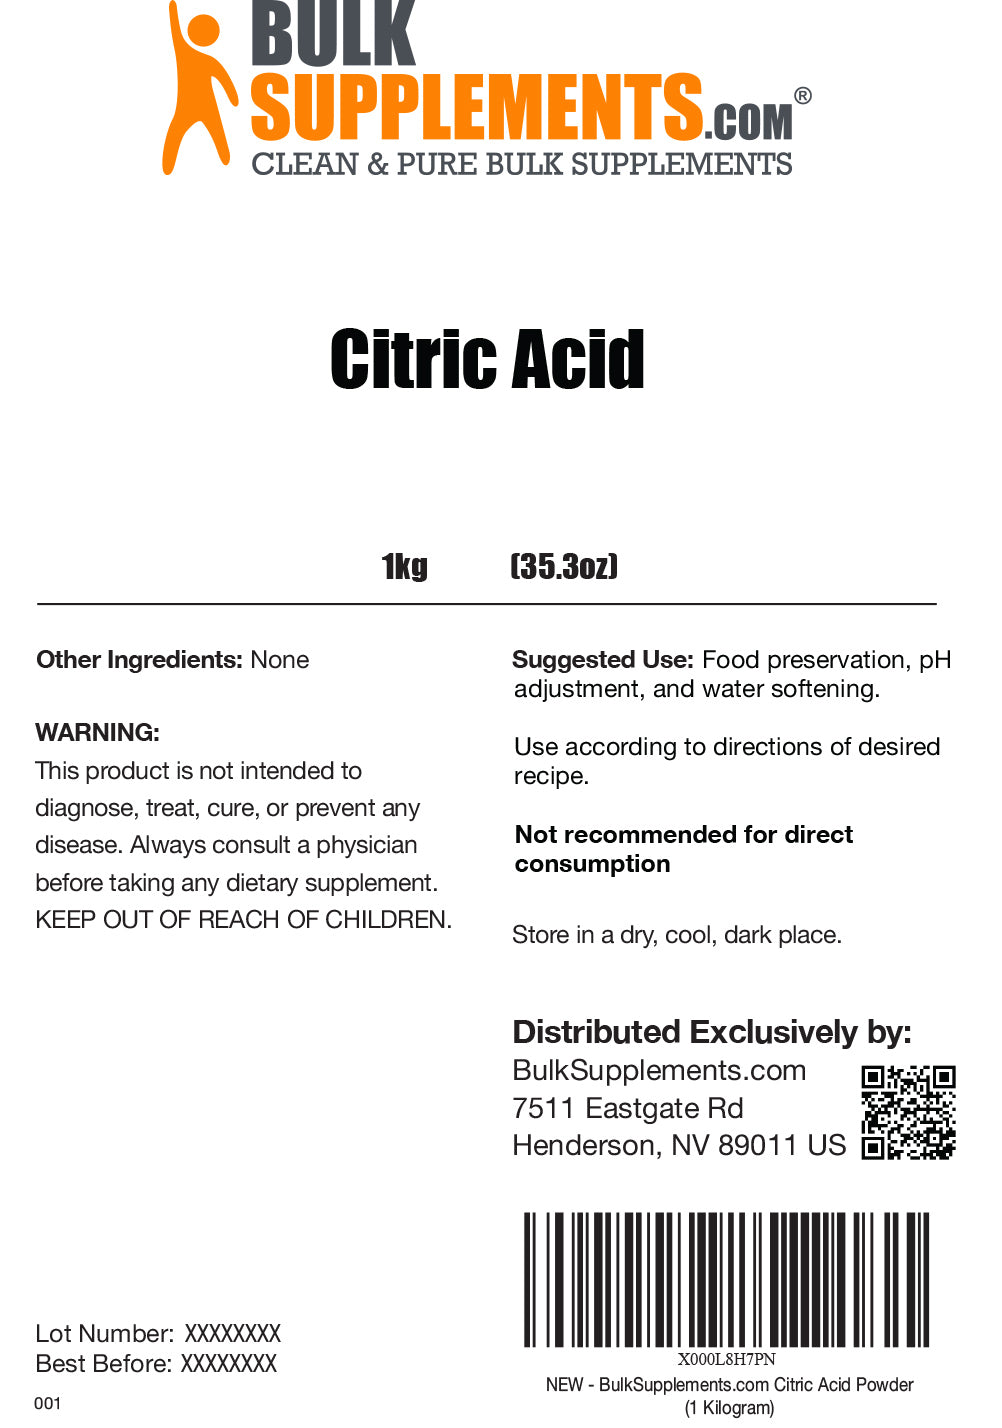 Citric Acid powder label 1kg